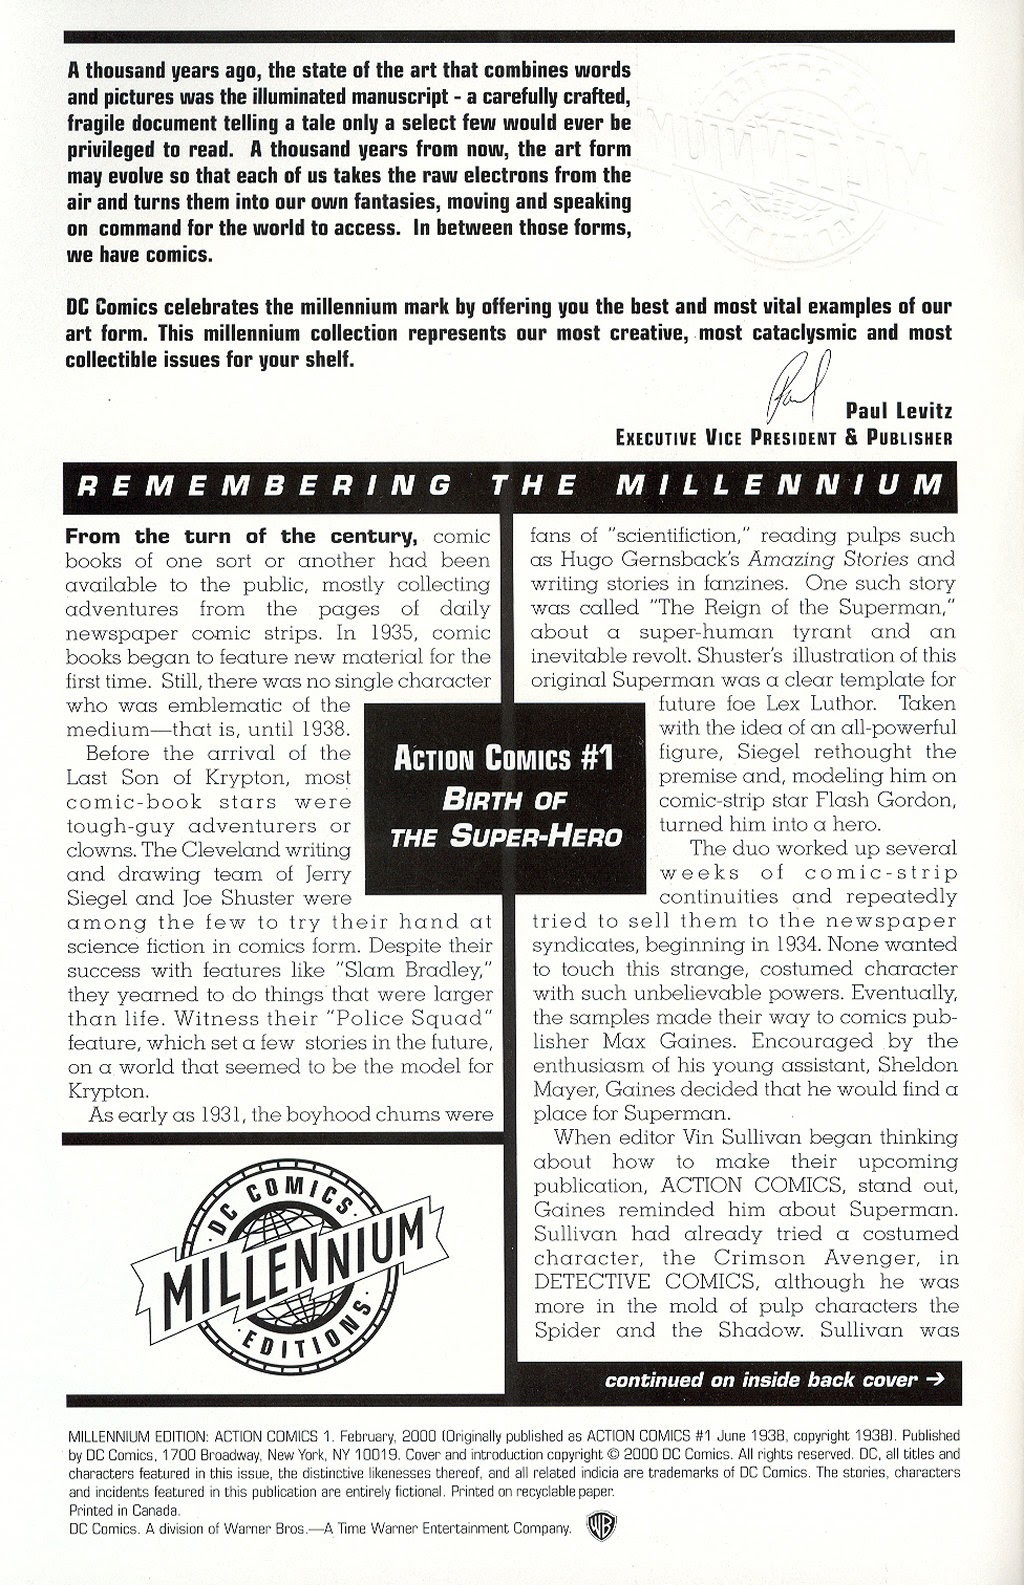 Read online Millennium Edition: Action Comics 1 comic -  Issue # Full - 2